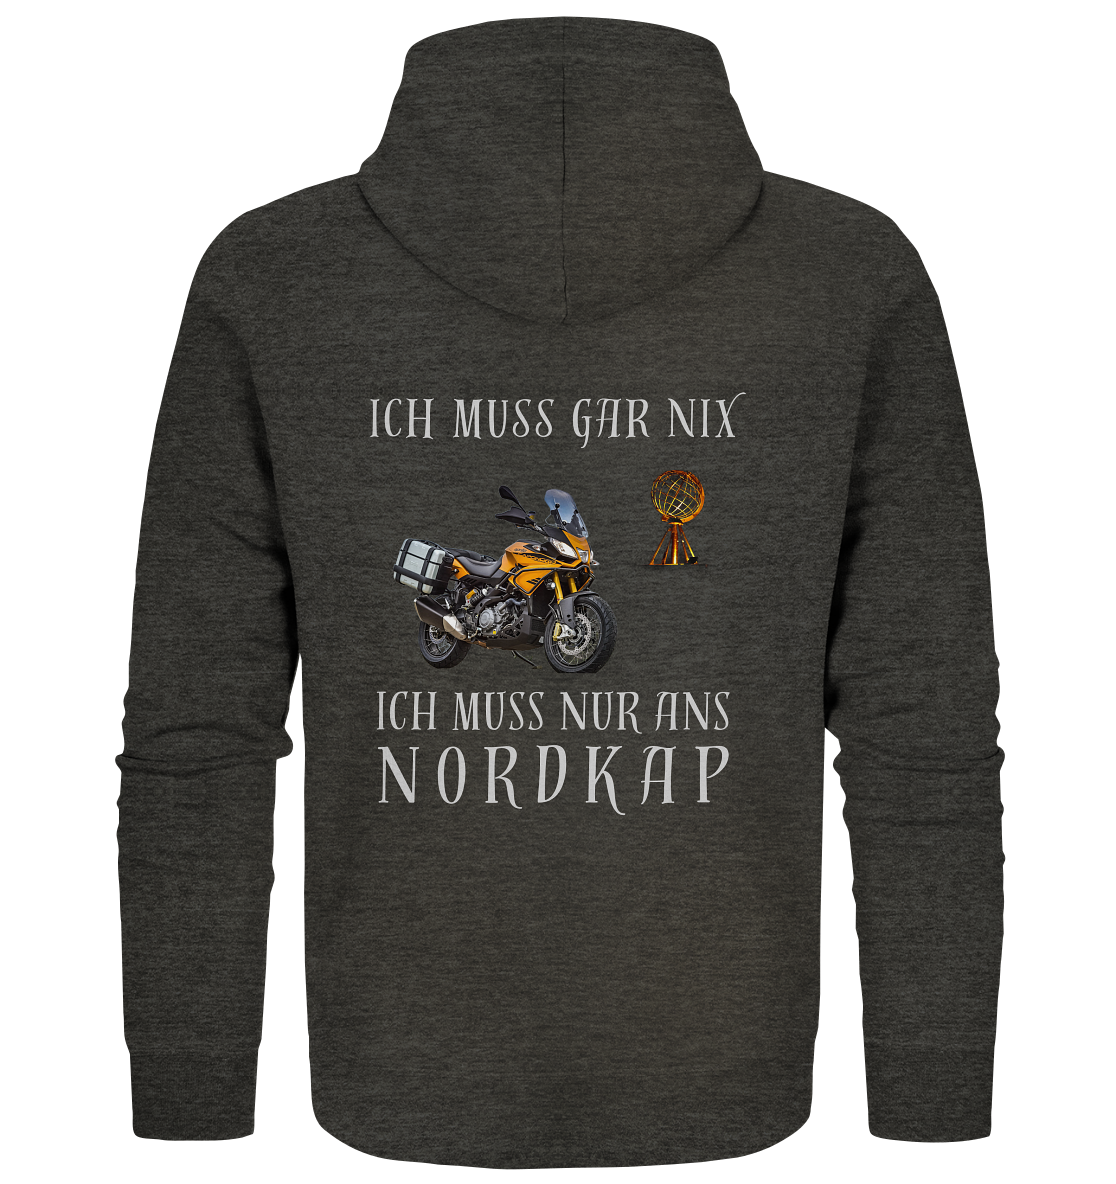 "Ich muss gar nix ..." _ Dirks Nordkap-Hoodie-Jacke in hellem Design